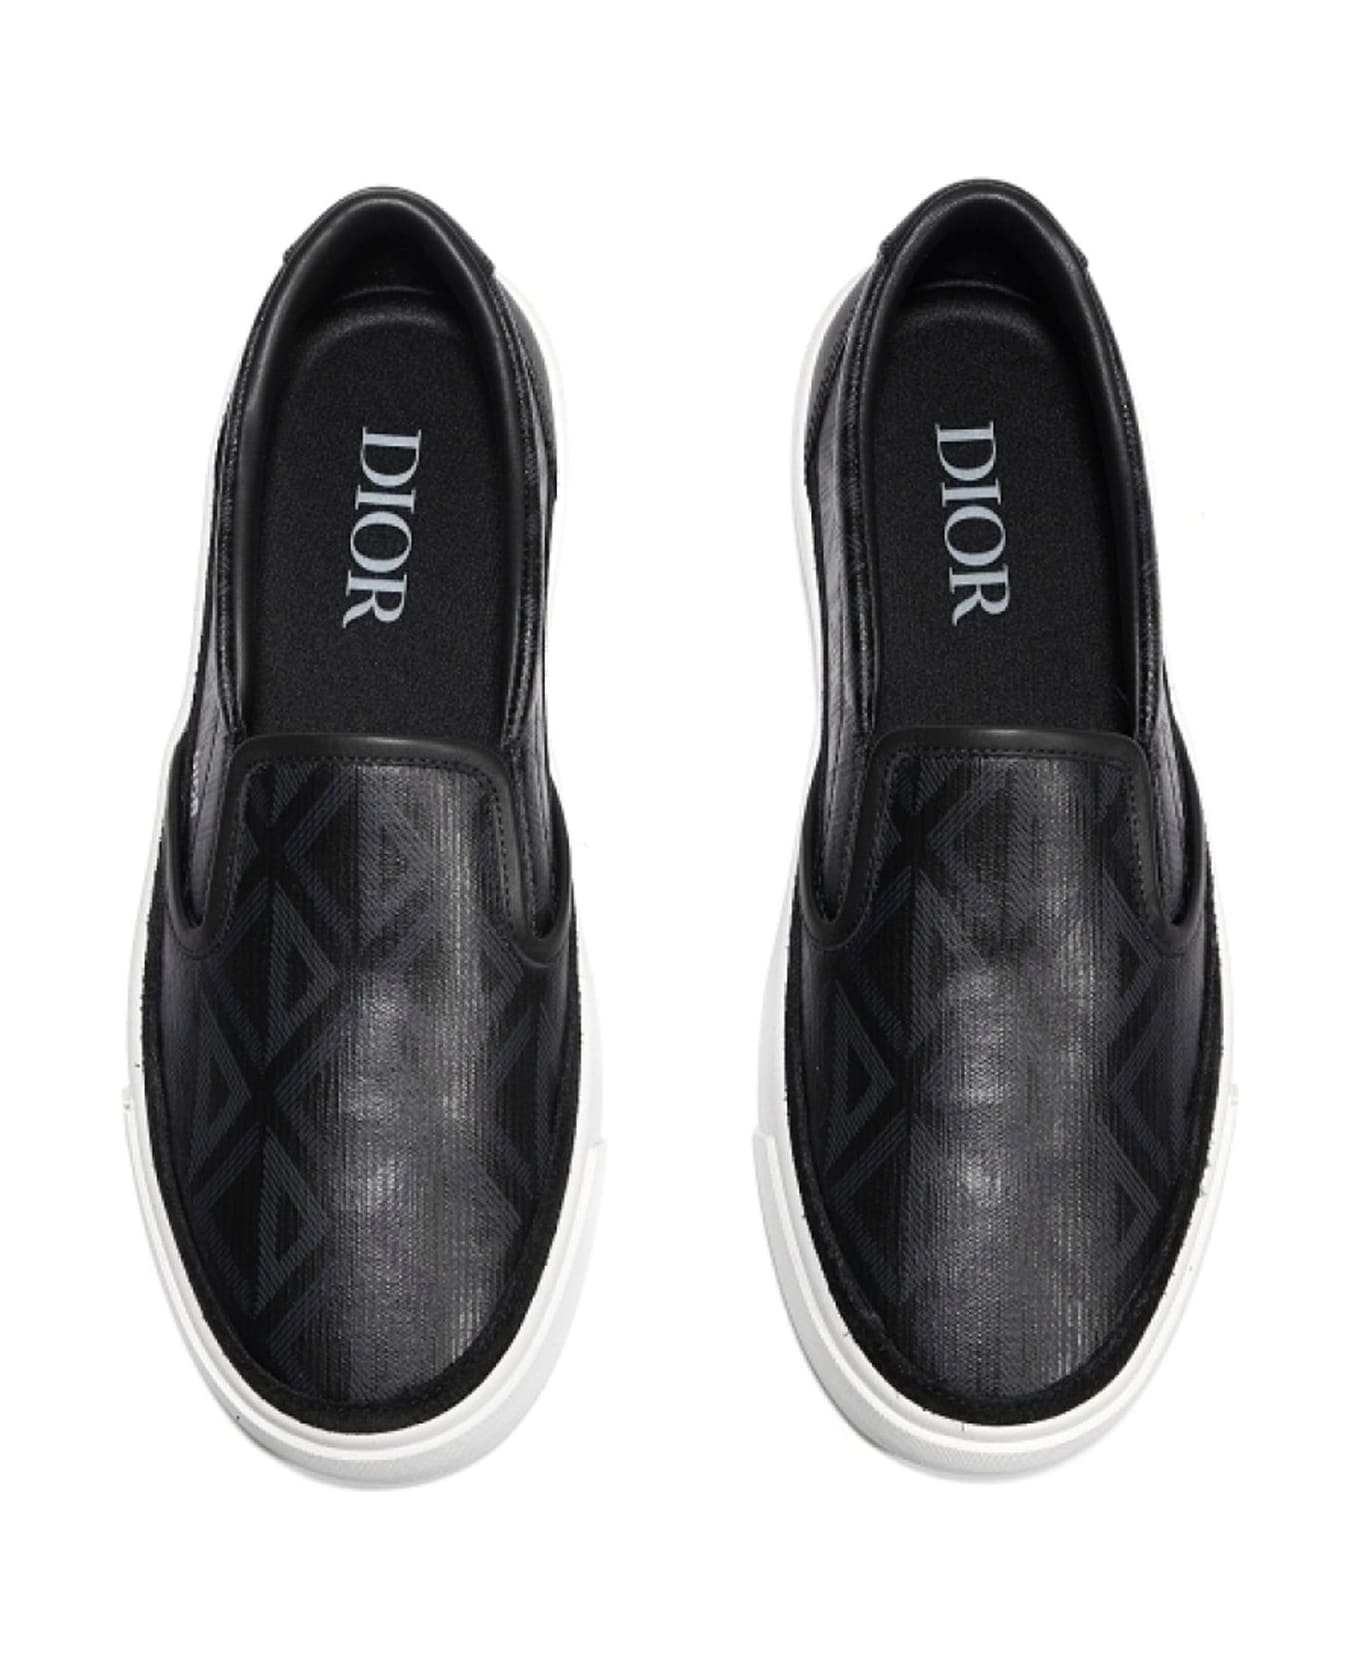 Dior Cd Diamond Slip-on Sneakers - Black